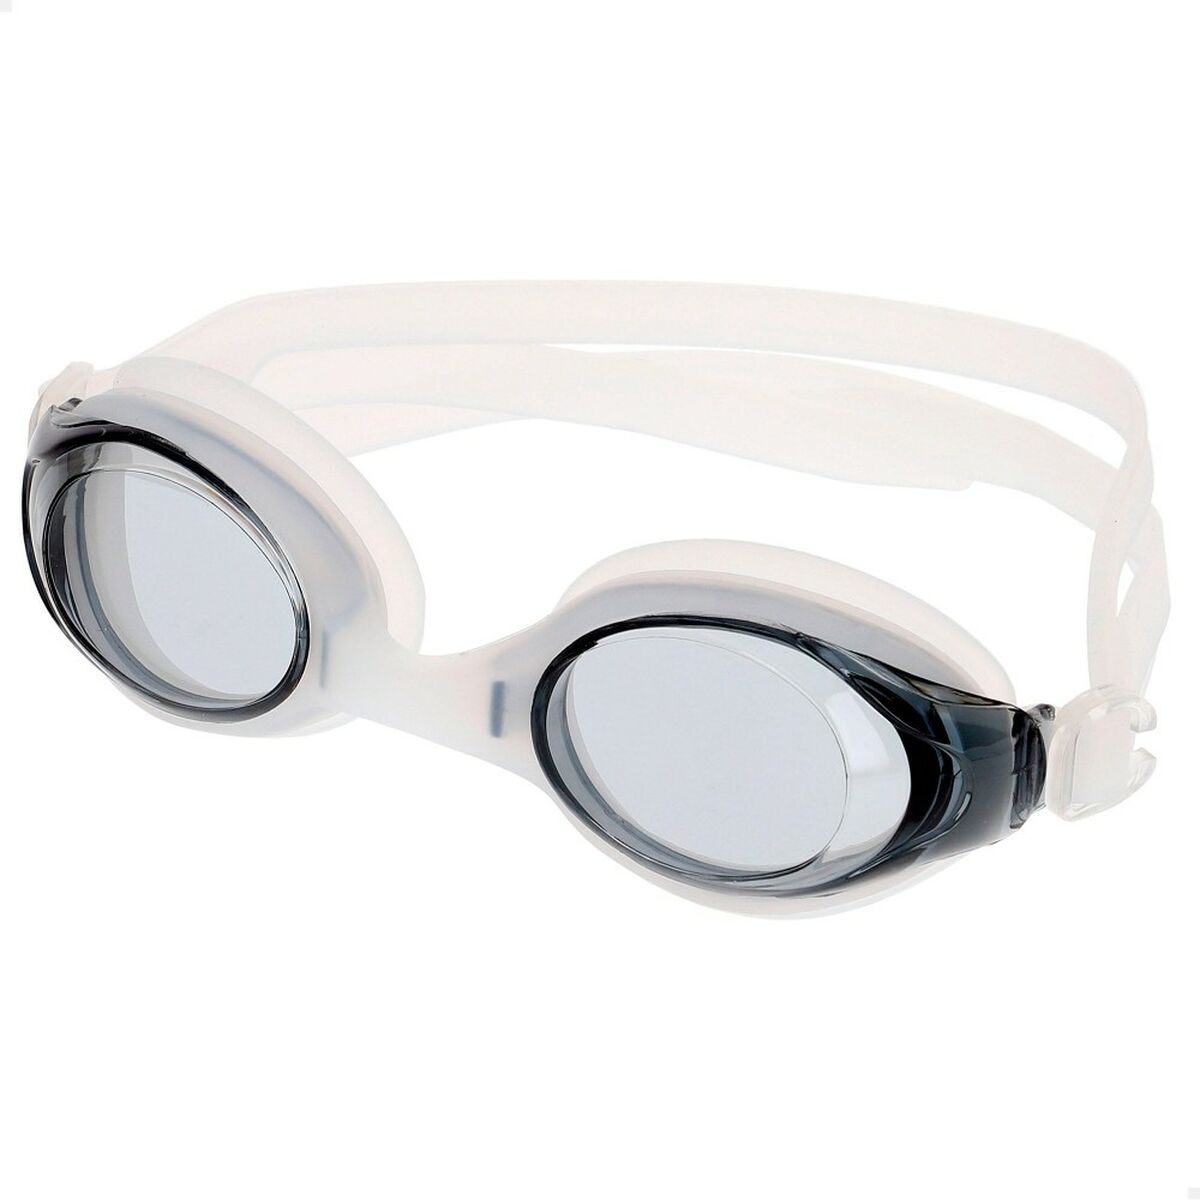 Adult Swimming Goggles Aktive (12 Units)